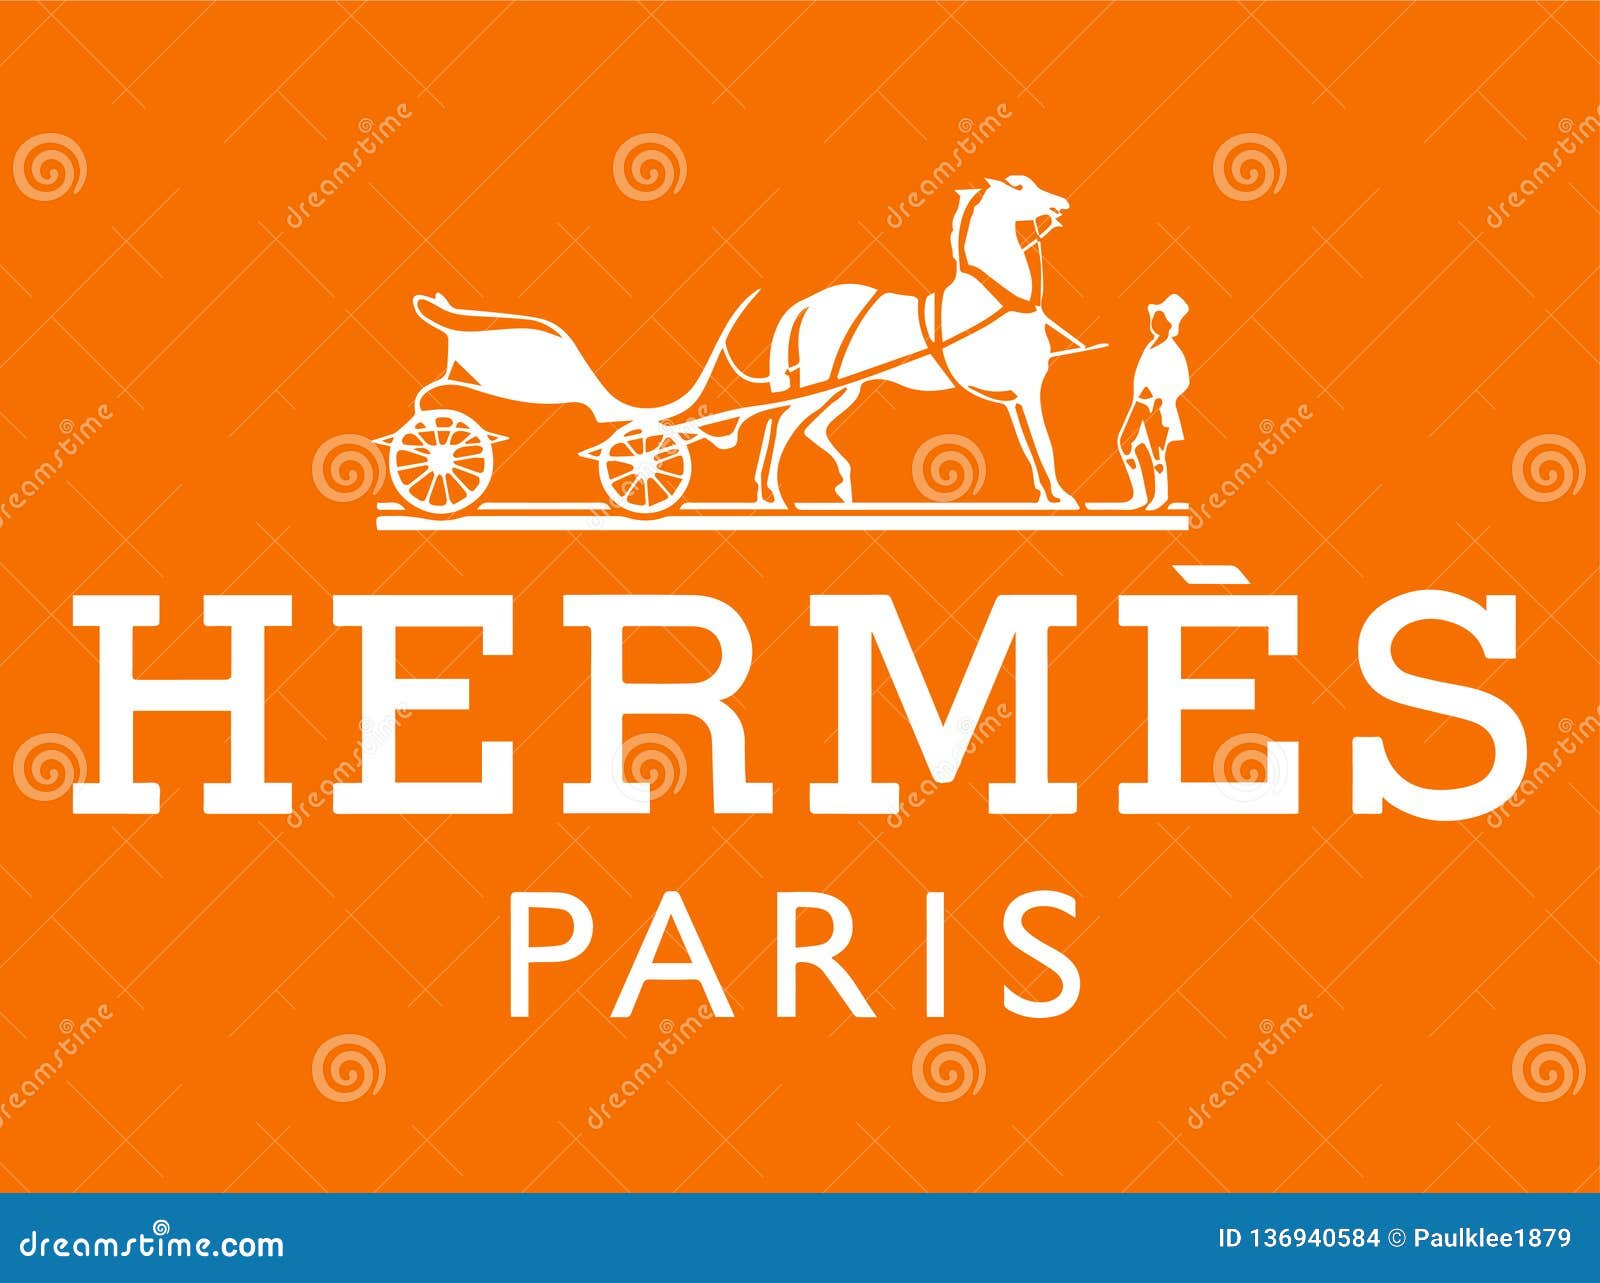 Hermes Paris Vector Illustration 